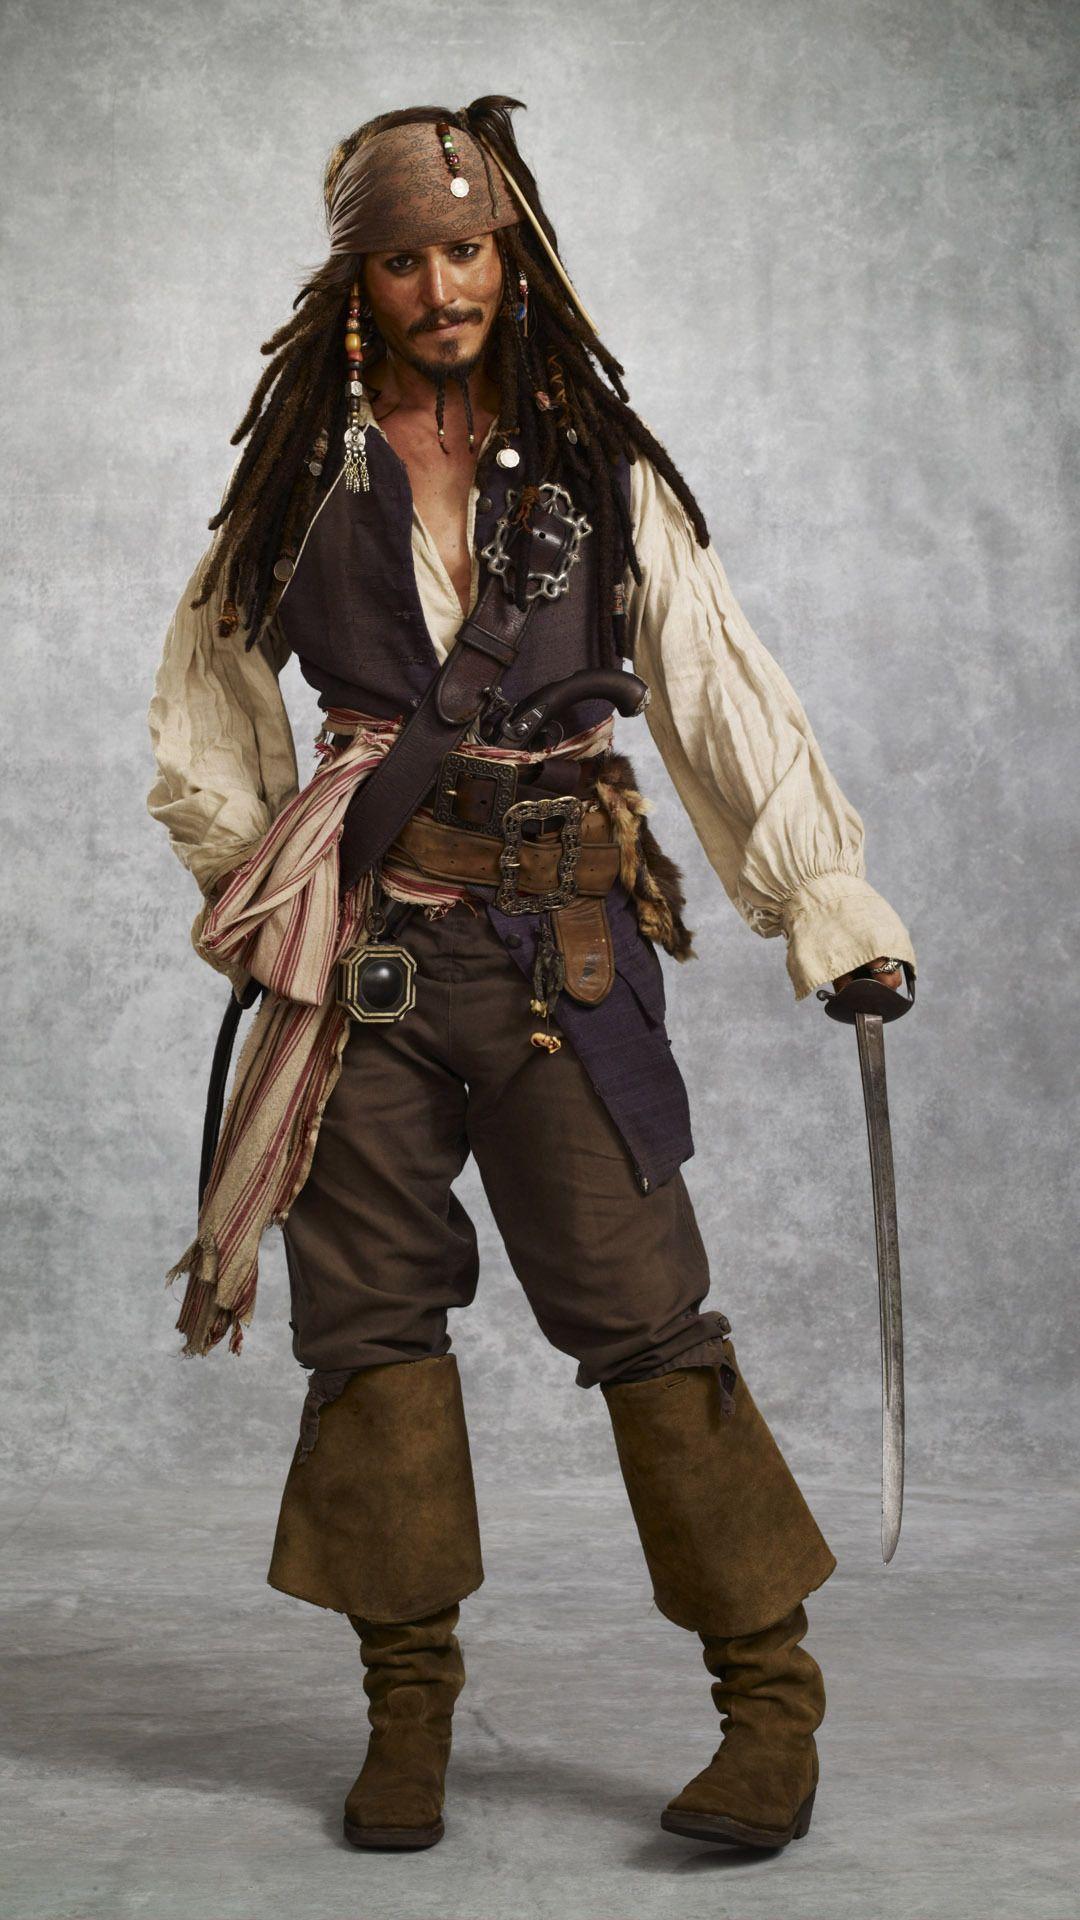 Captain Jack Sparrow Movie mobile wallpaper download. =MY